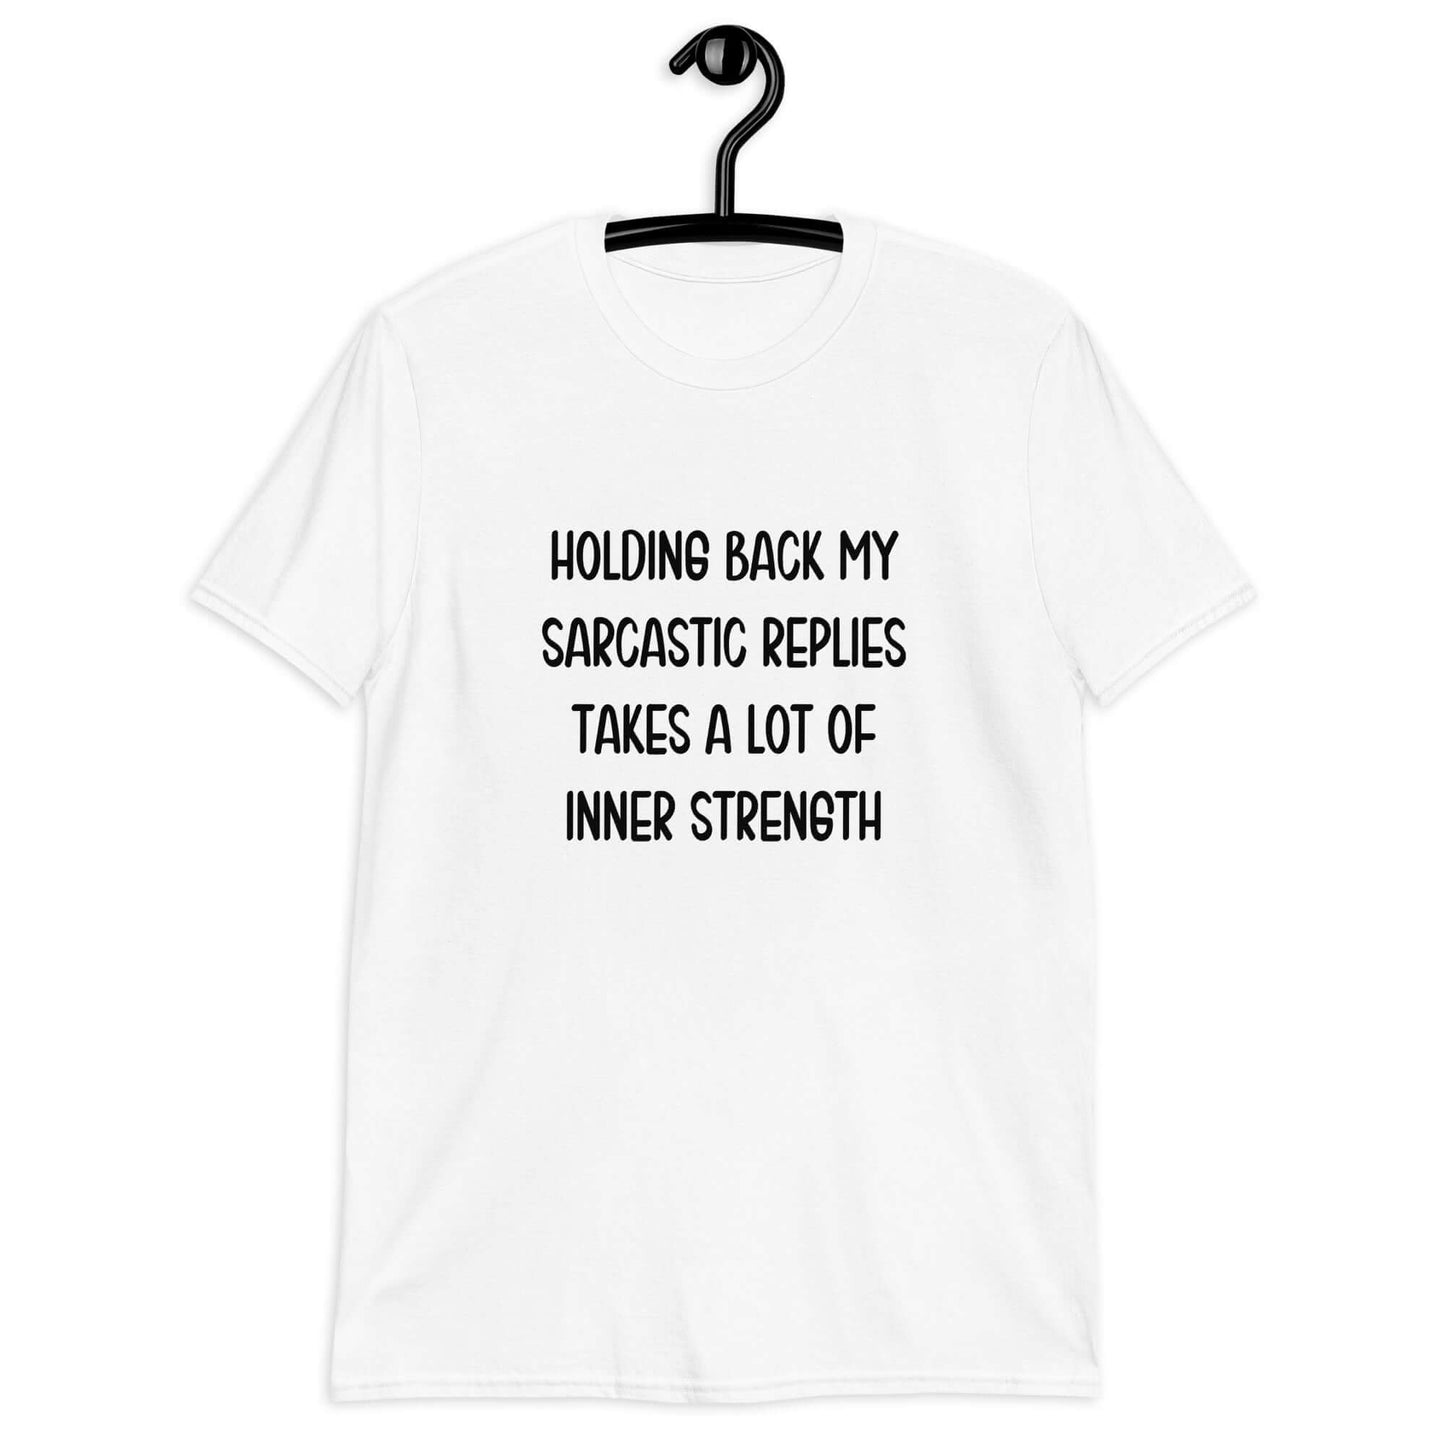 Sarcastic replies inner strength t-shirt